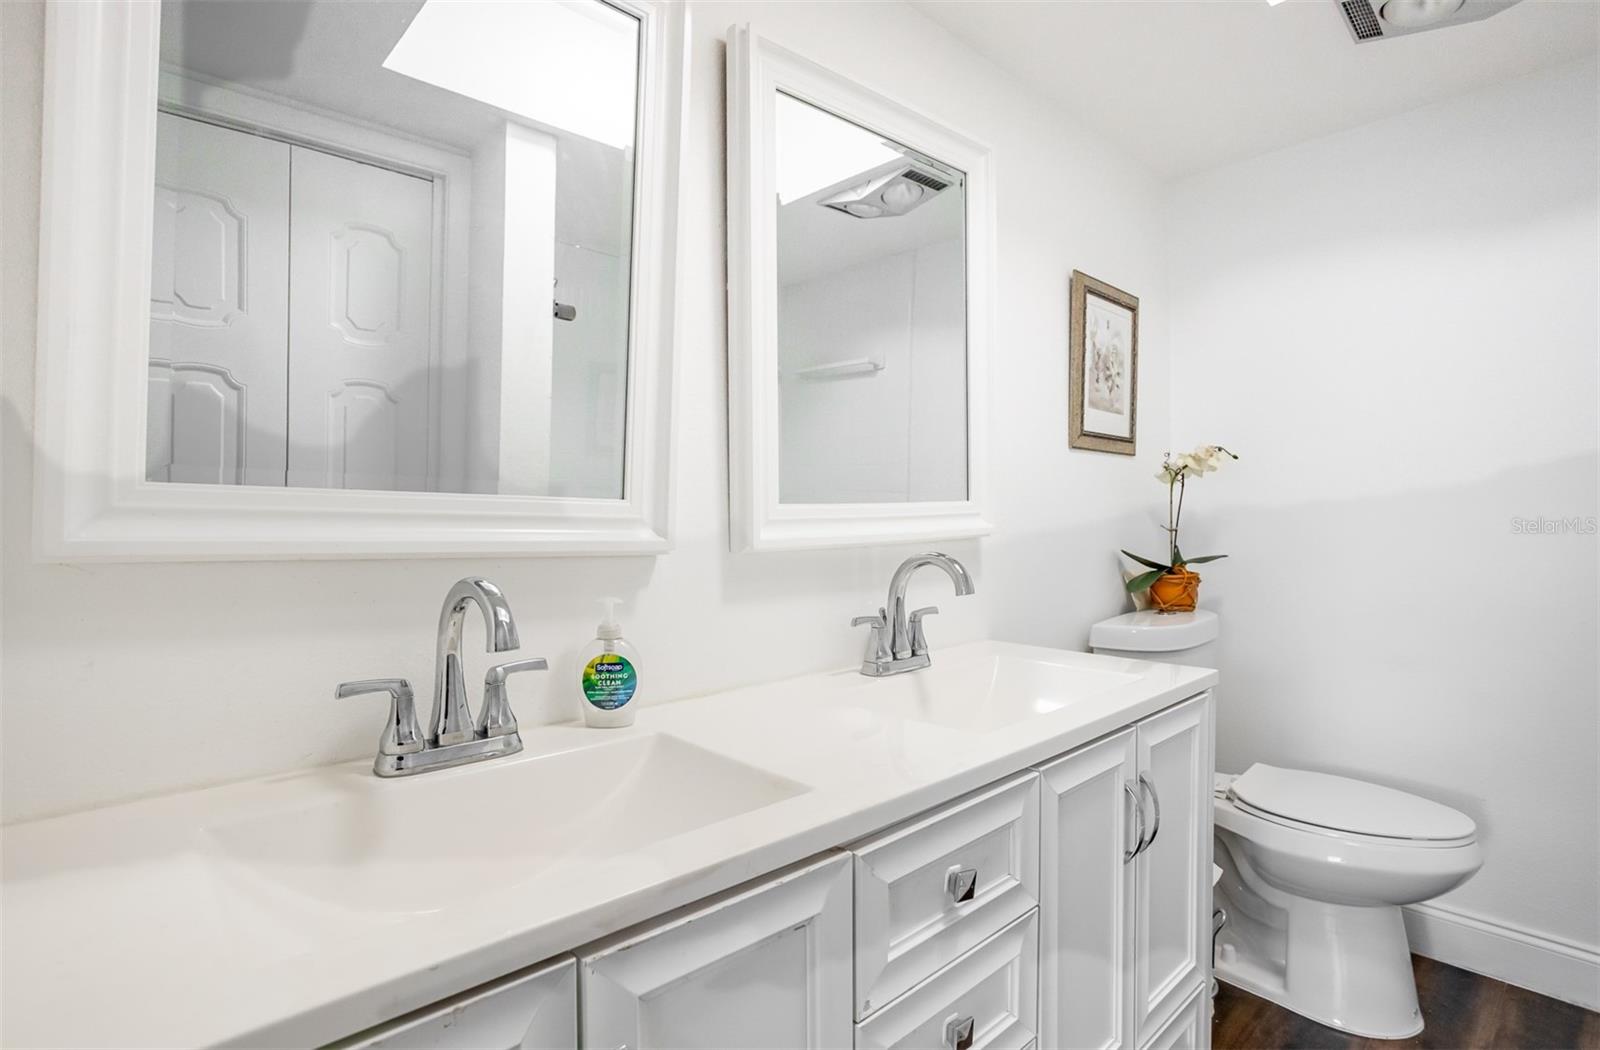 Double sink vanity in primary bathroom